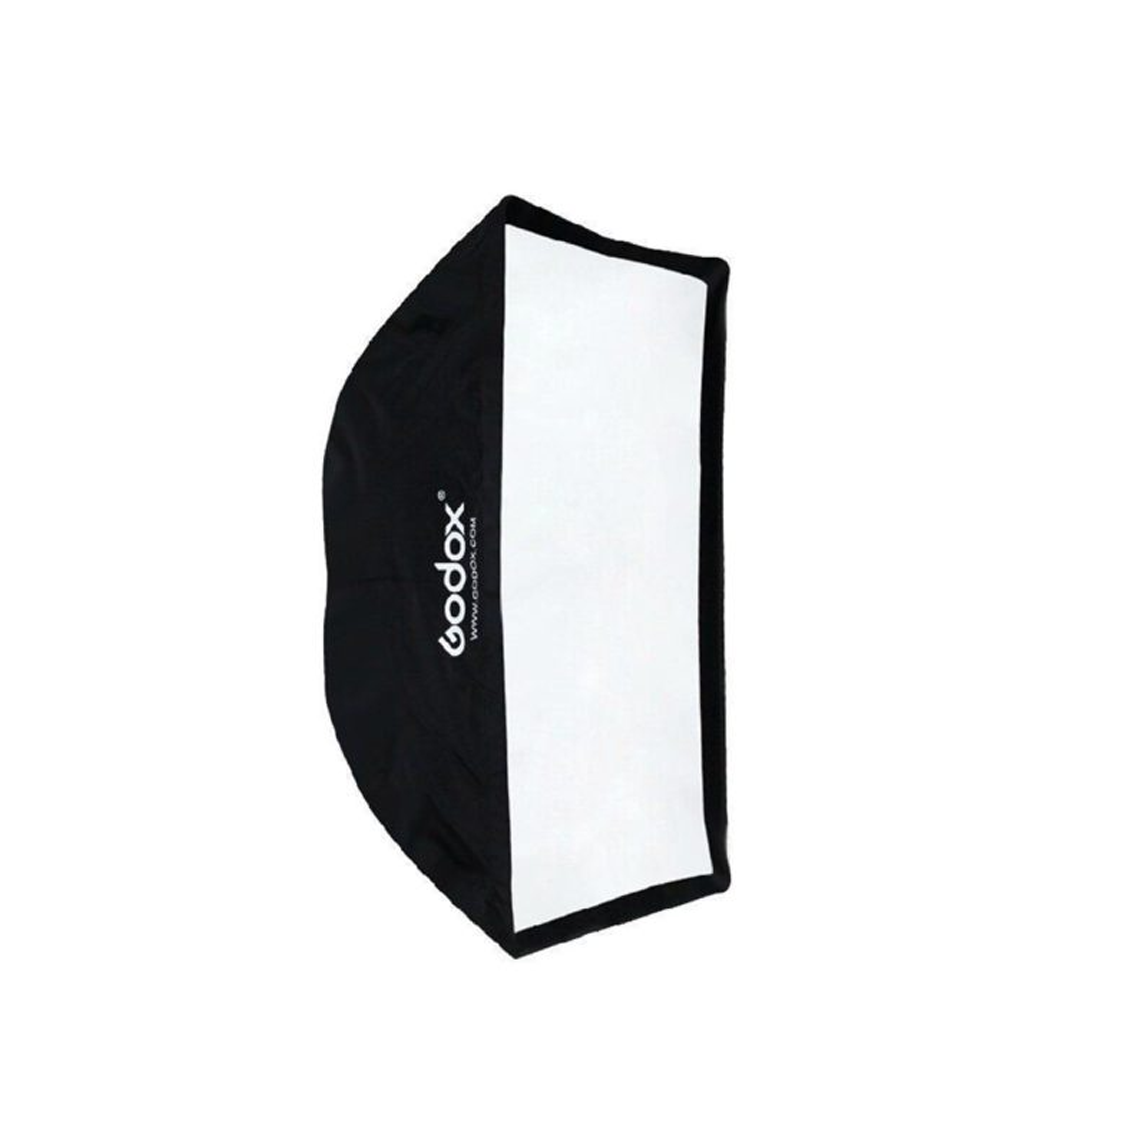 Godox Softbox with Bowens Speed Ring (35.4 x 35.4)